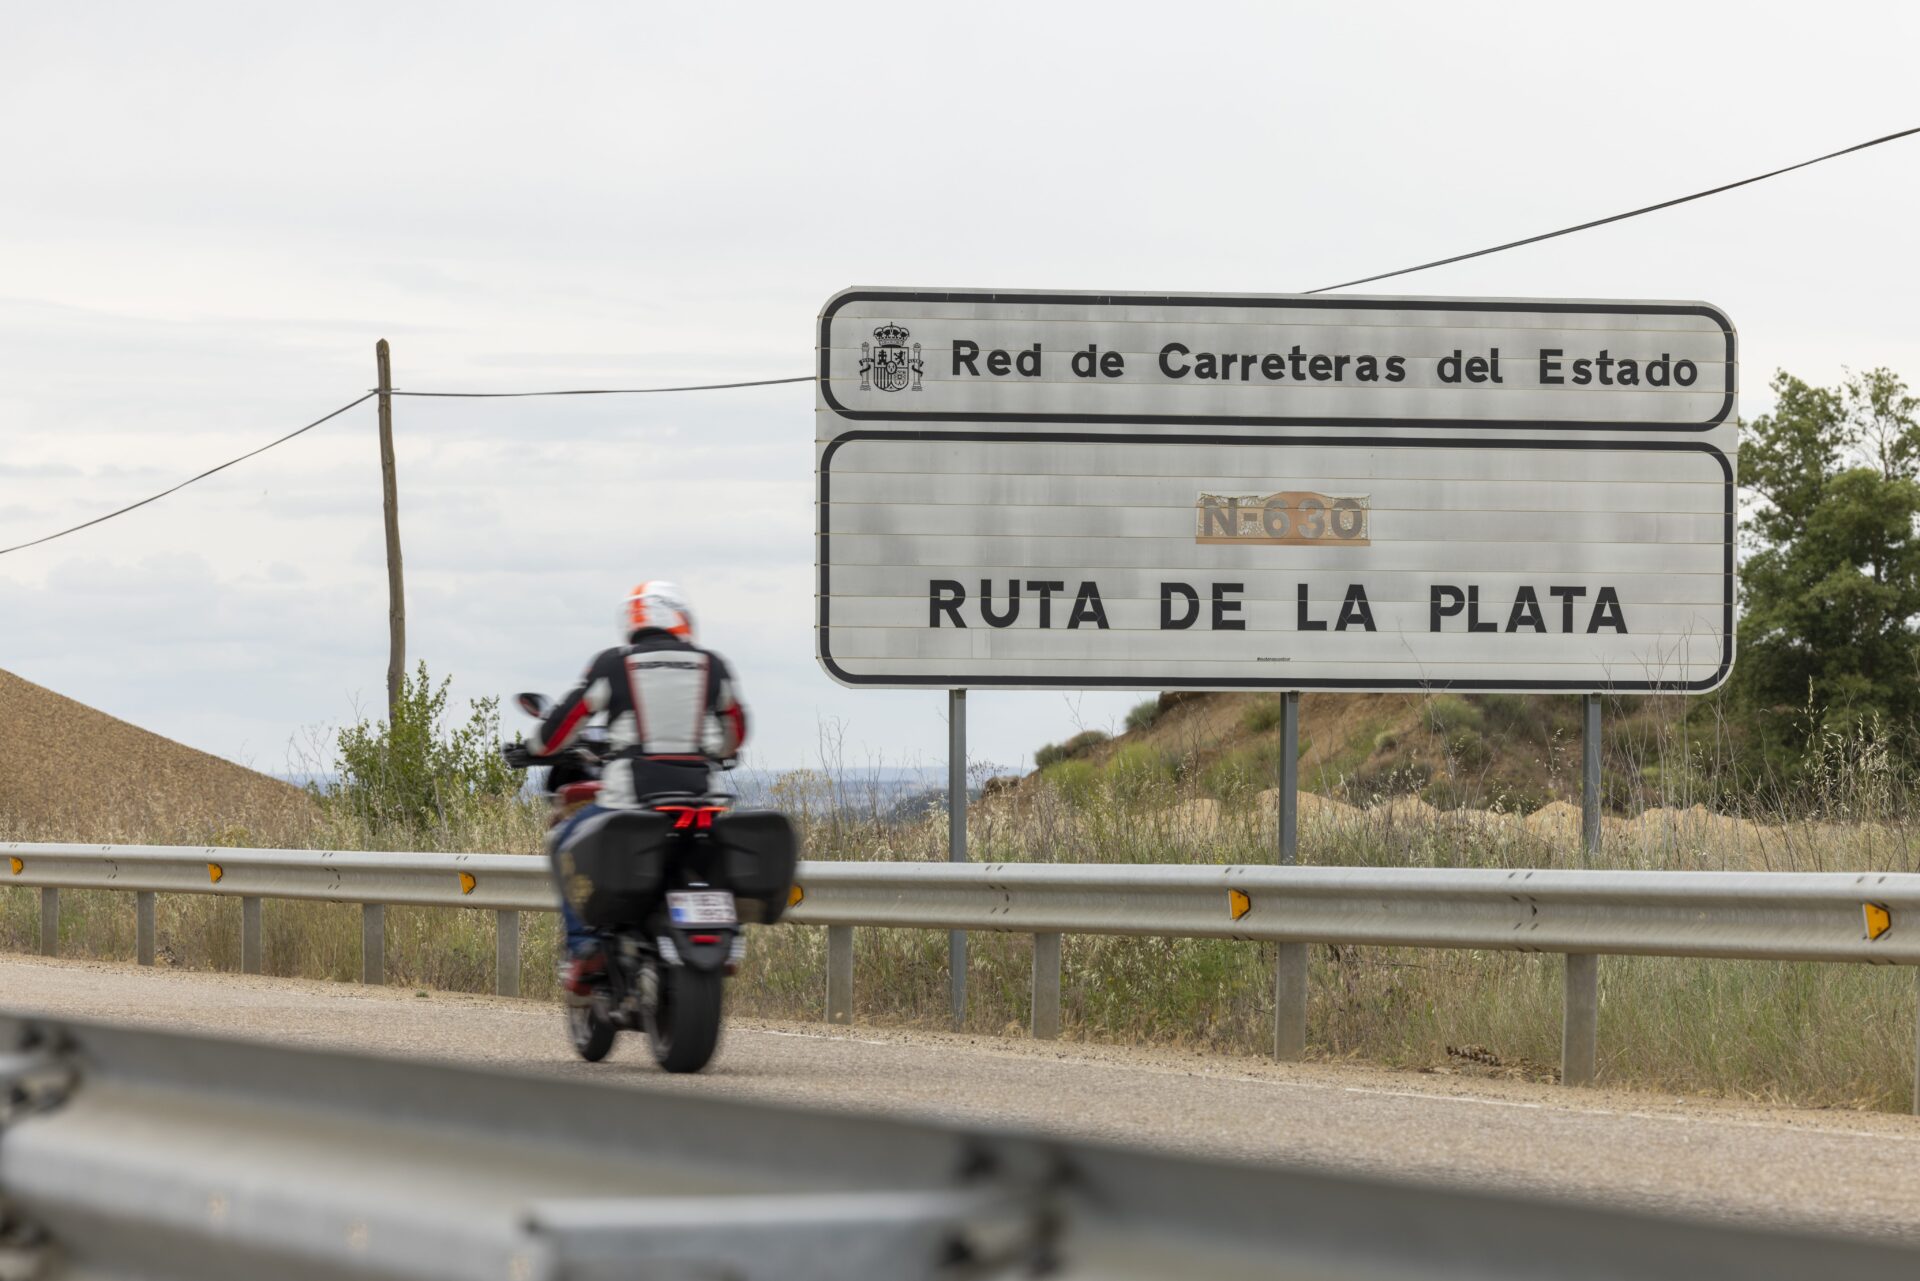 Motorcycle rider in Spain